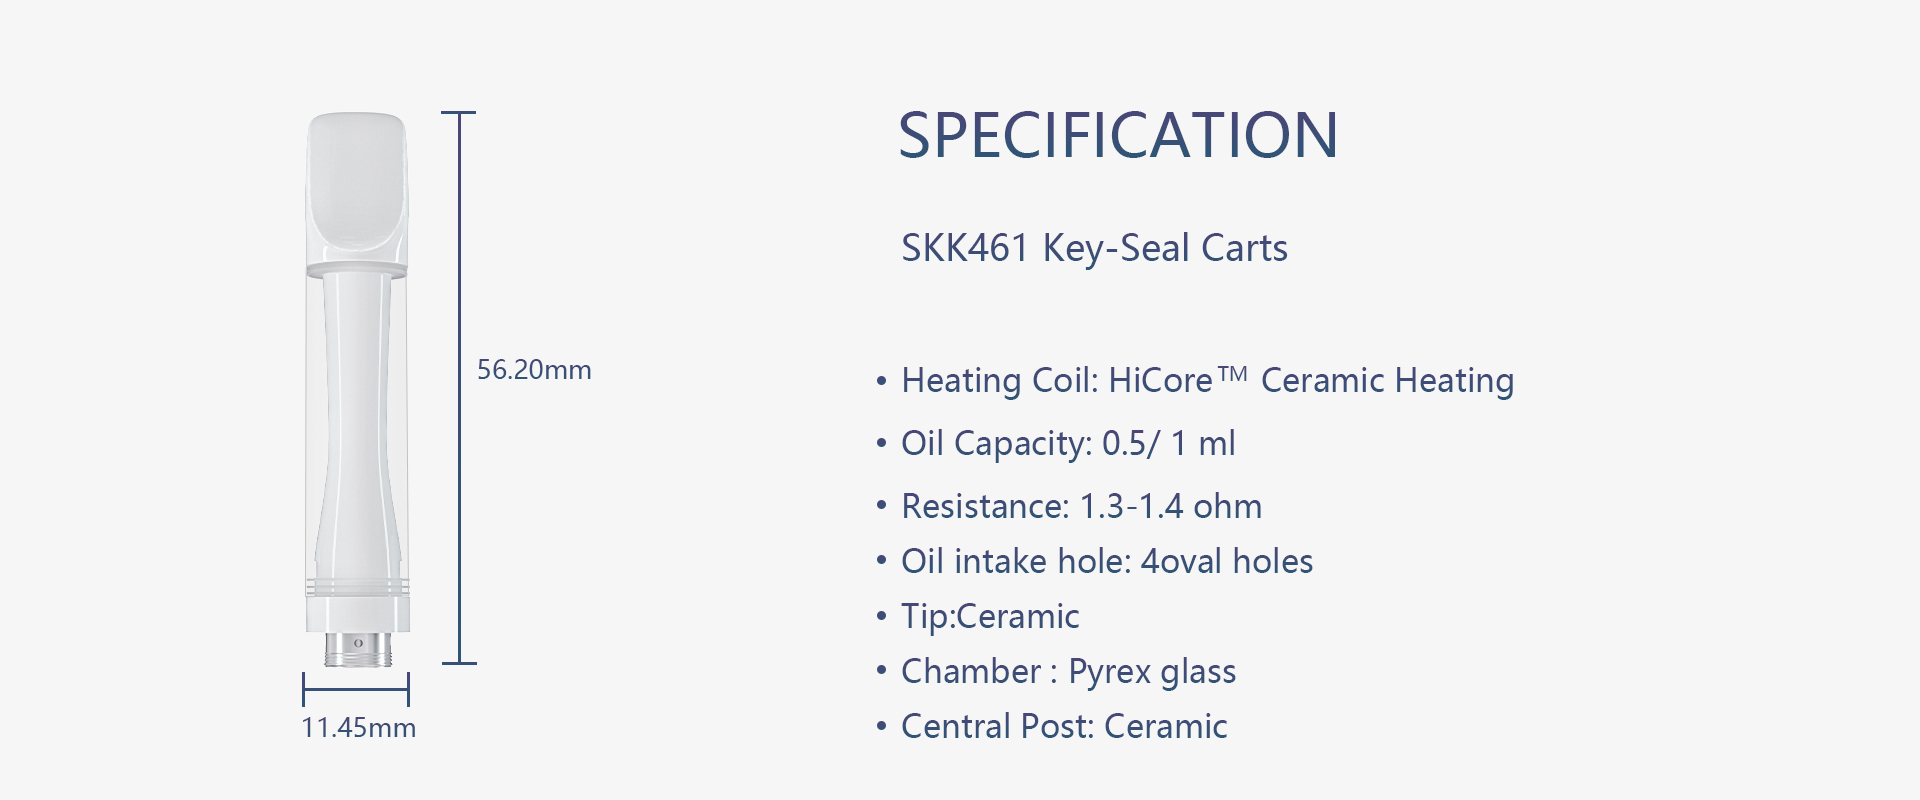 Key Seal Carts SKK461